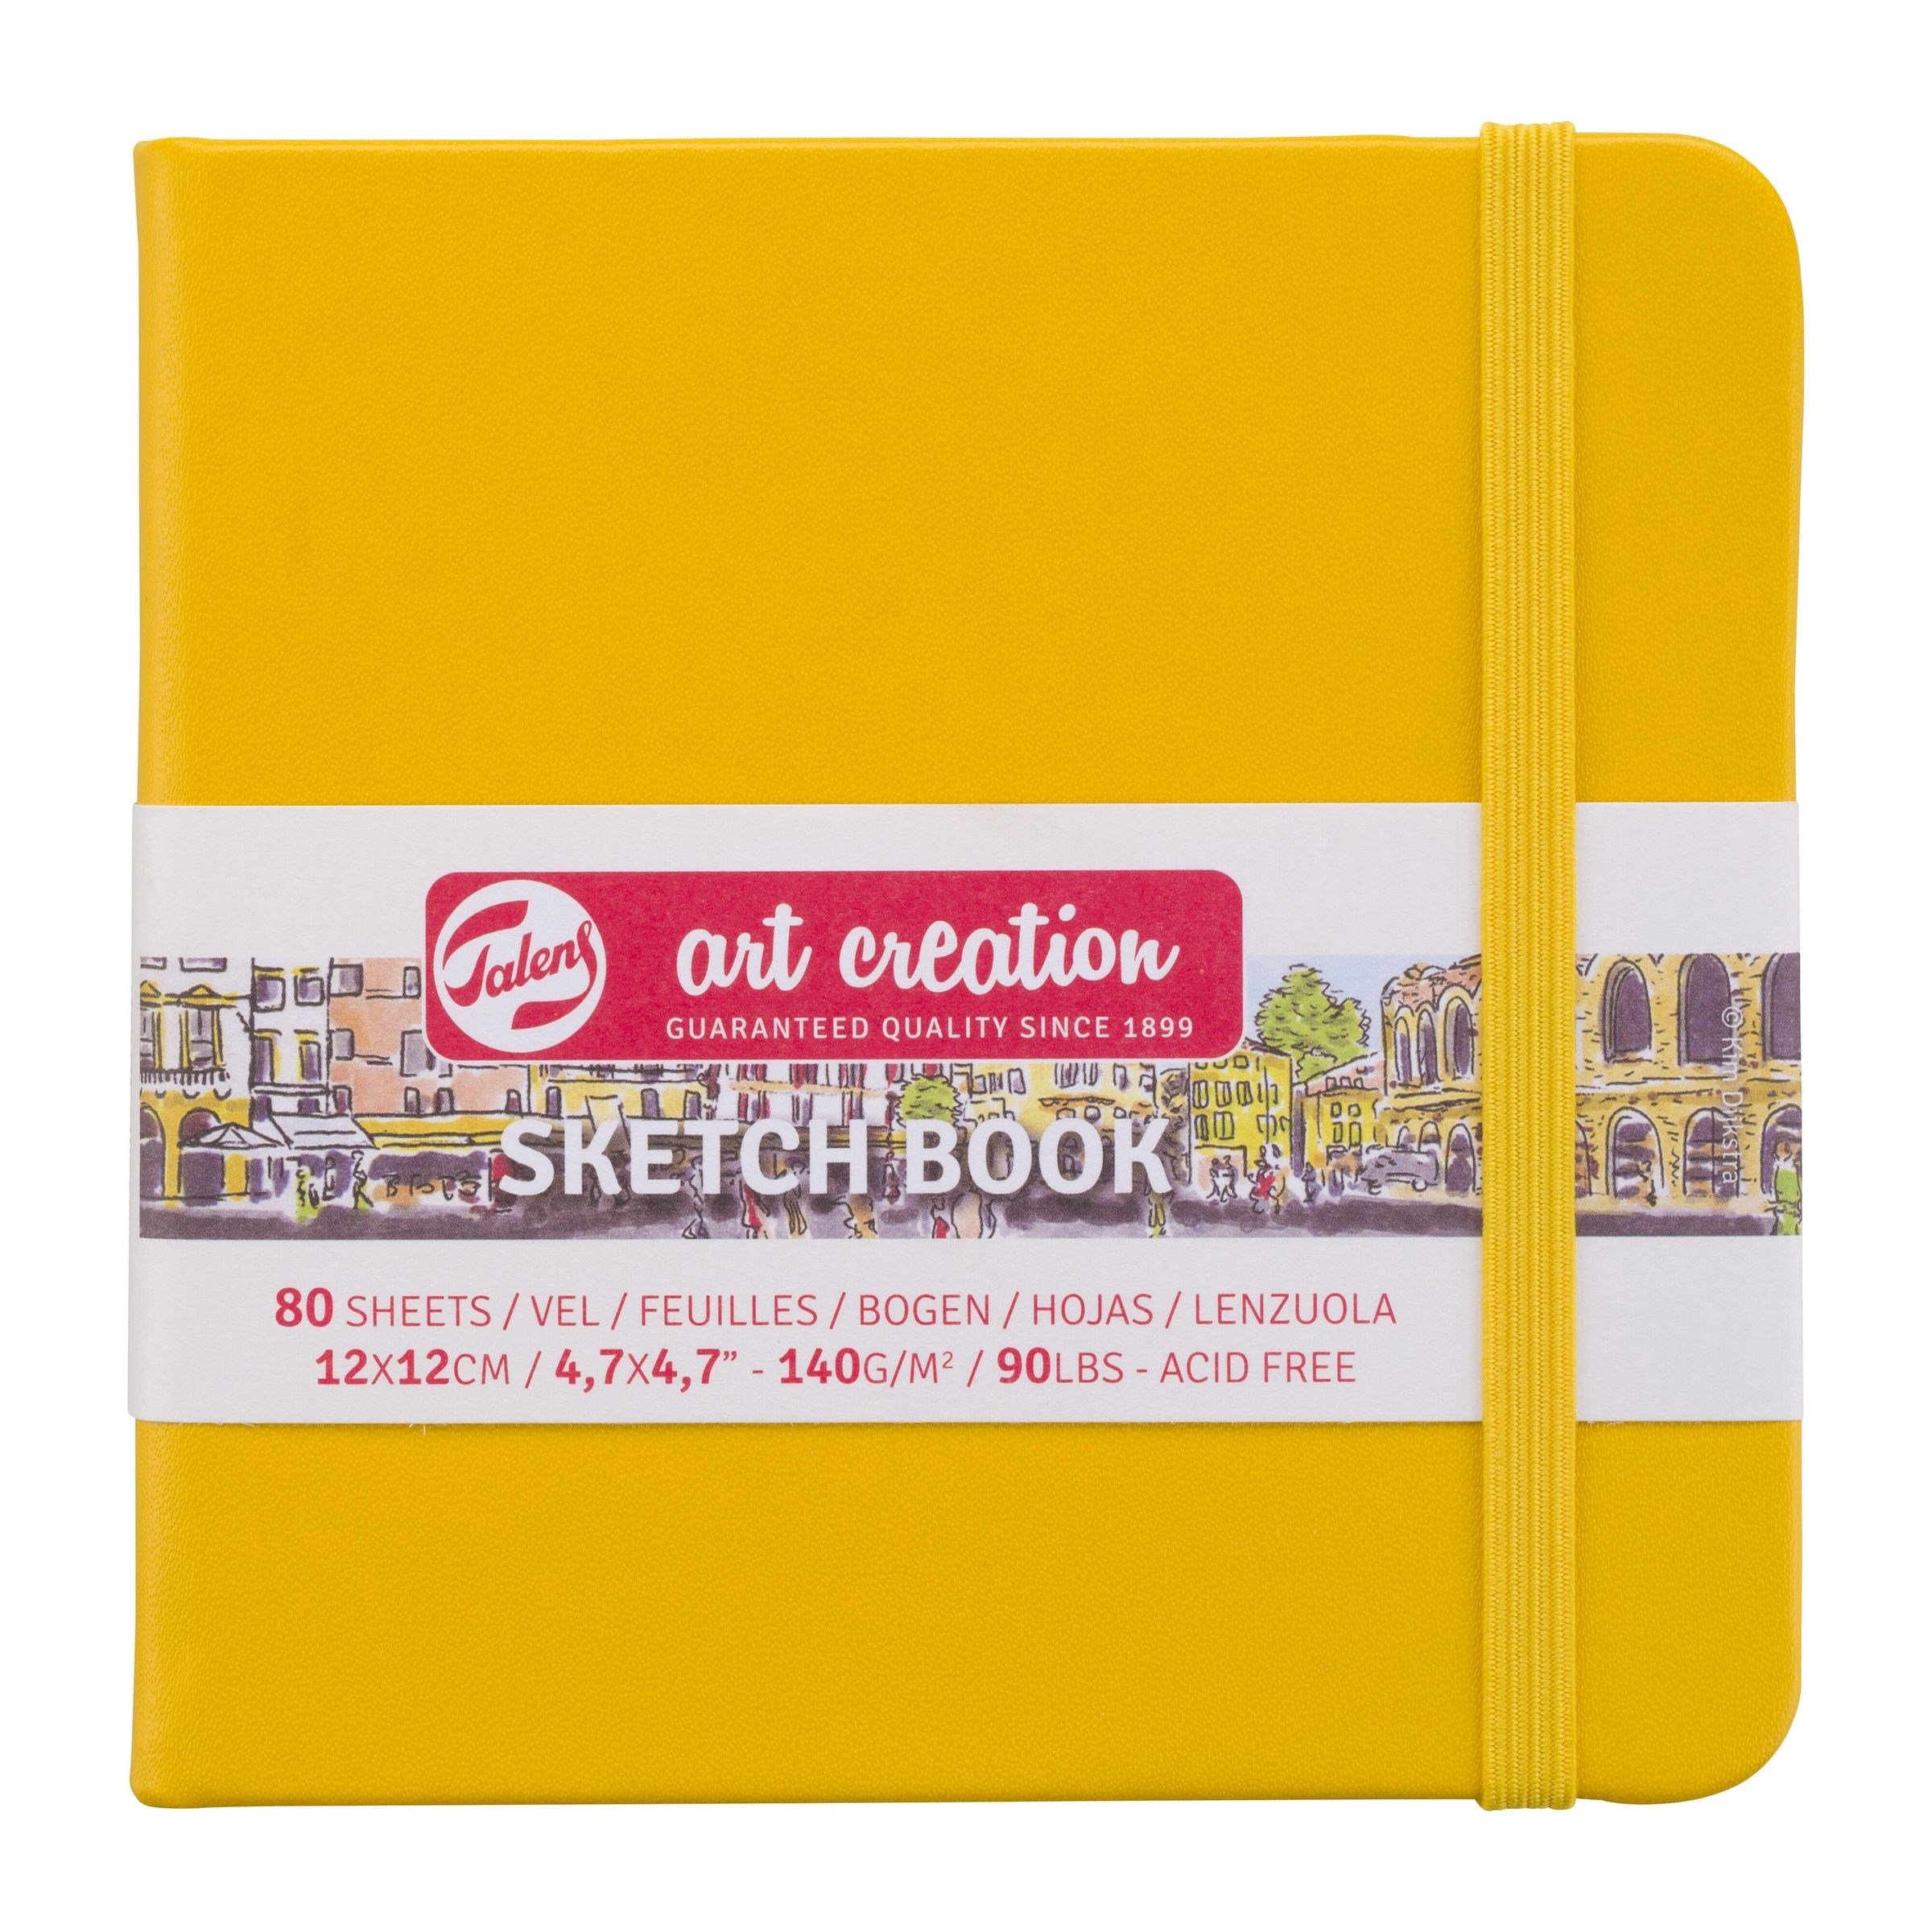 Caiet de schite - Talens Art Creation - Square, 80 Sheets - Golden Yellow | Royal Talens